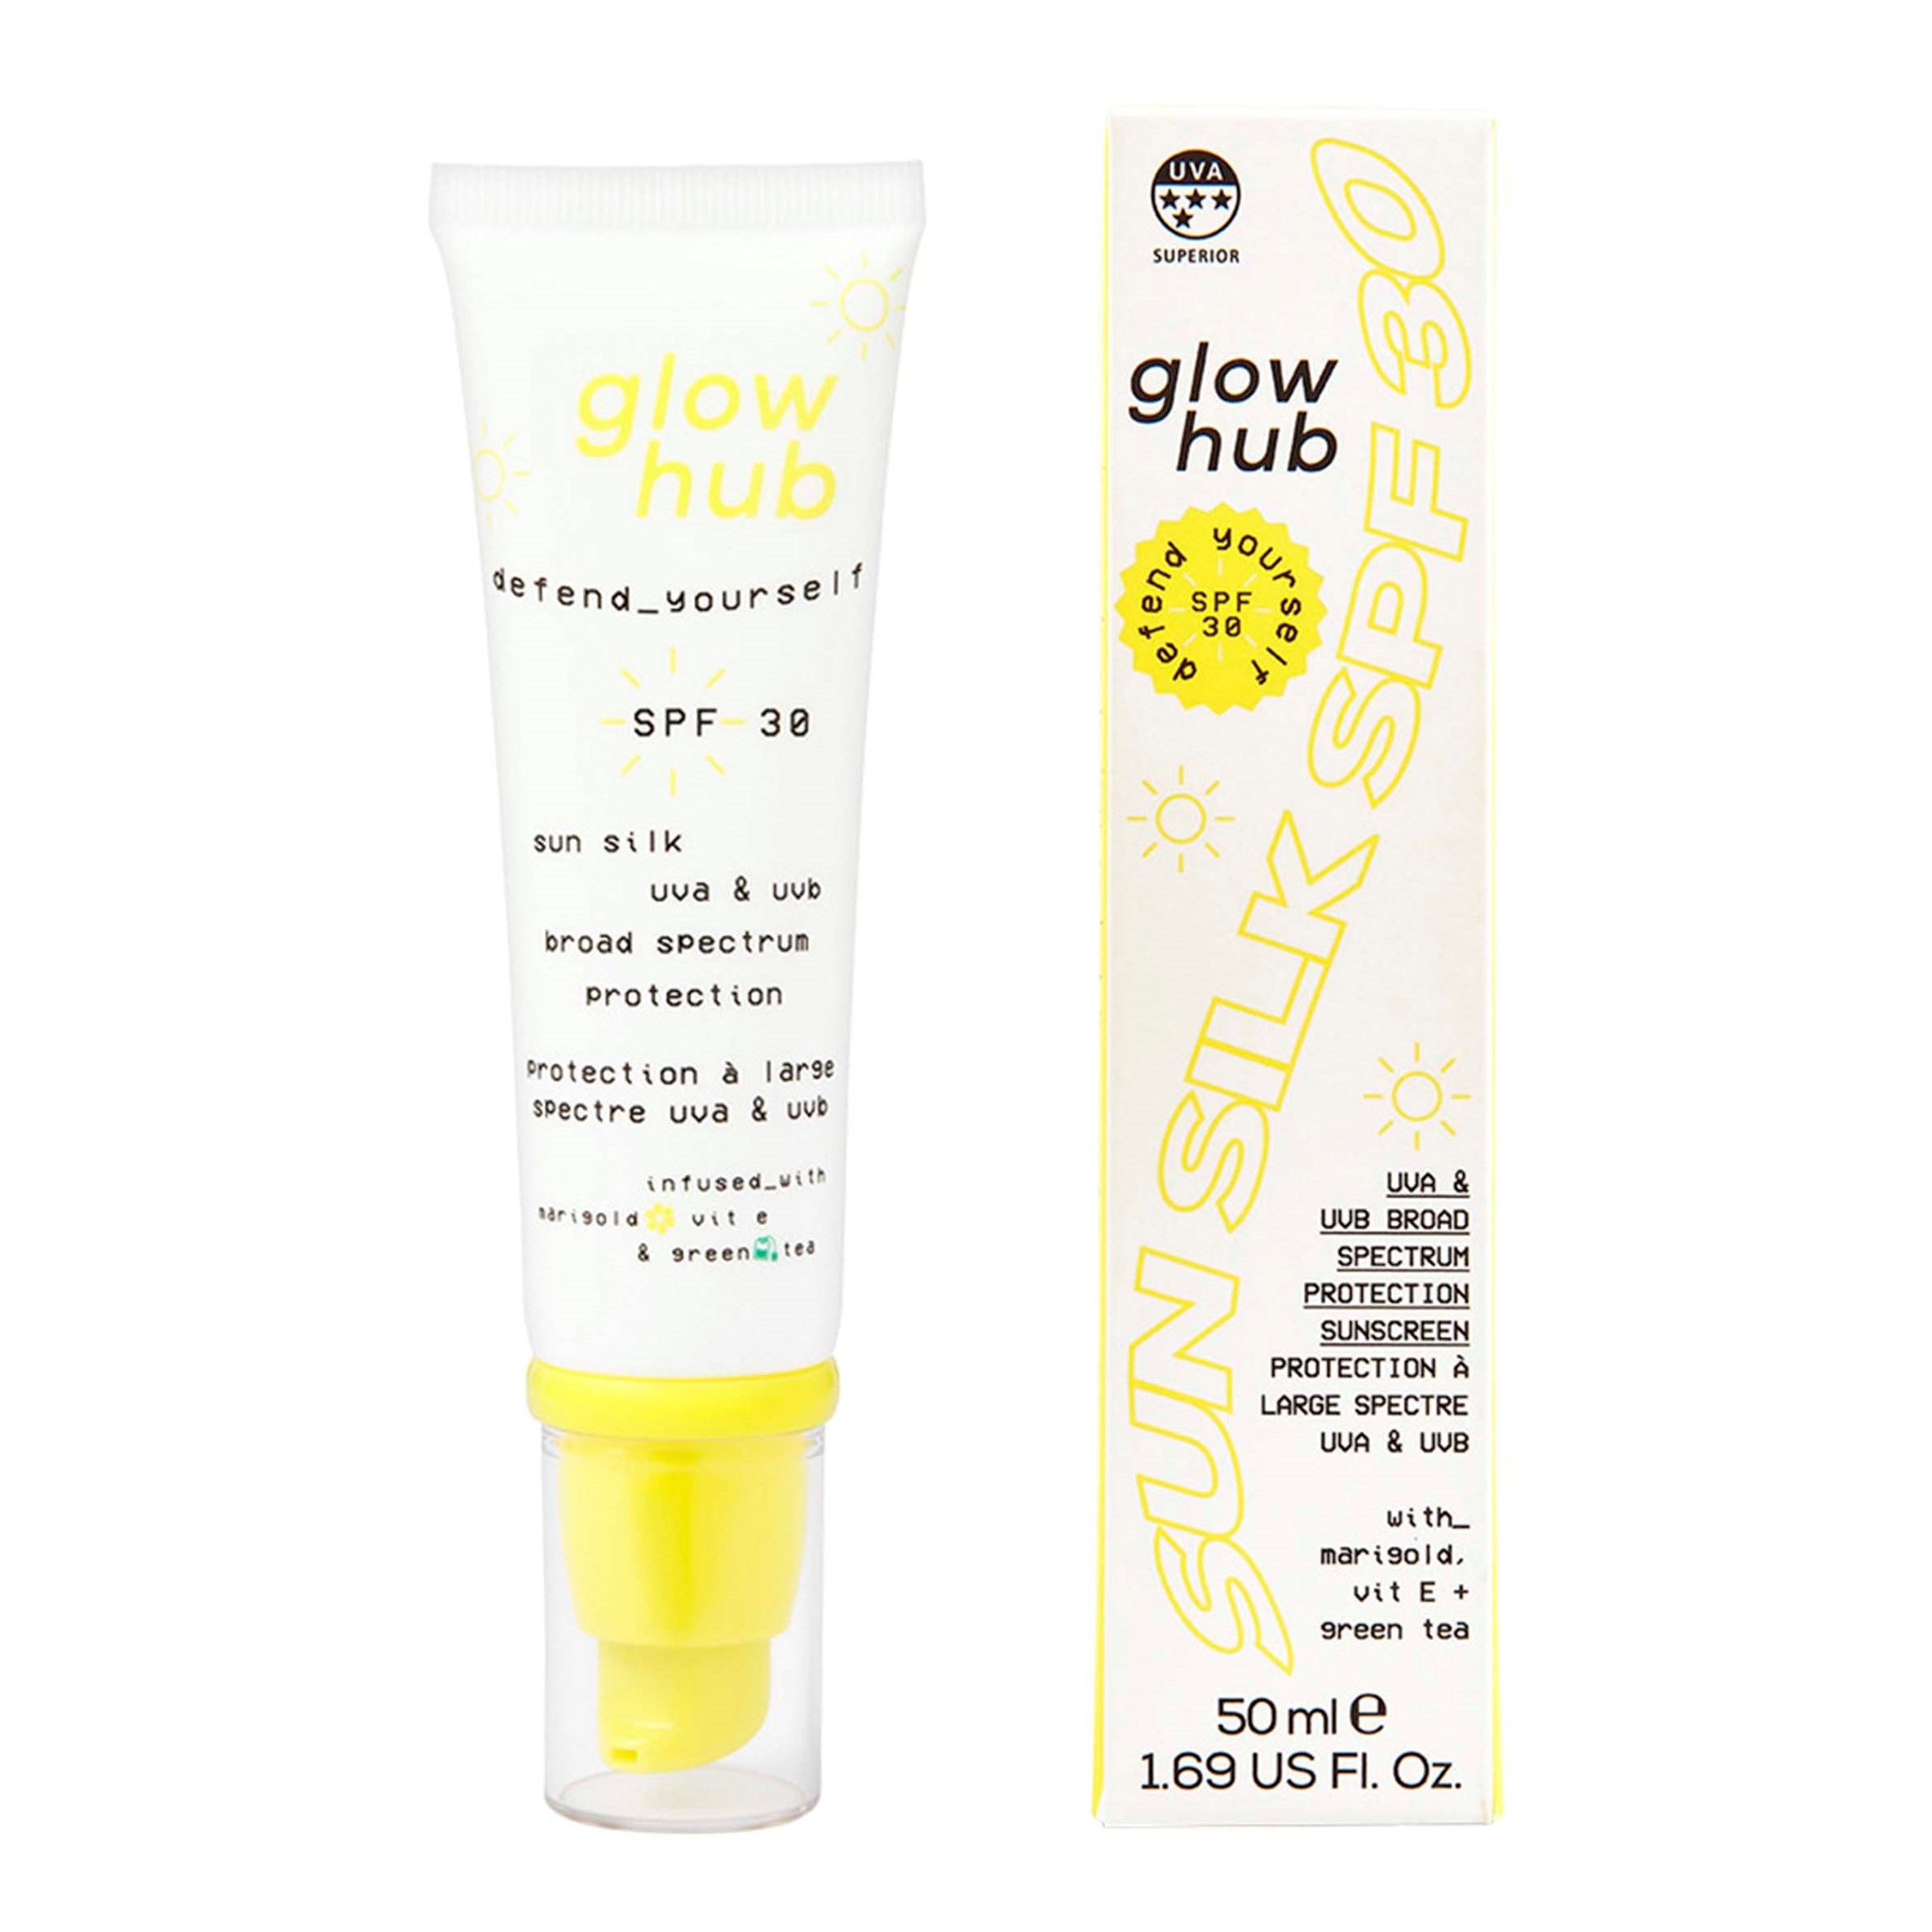 Glow Hub Defend Yourself Sun Silk SPF 30 50 ml